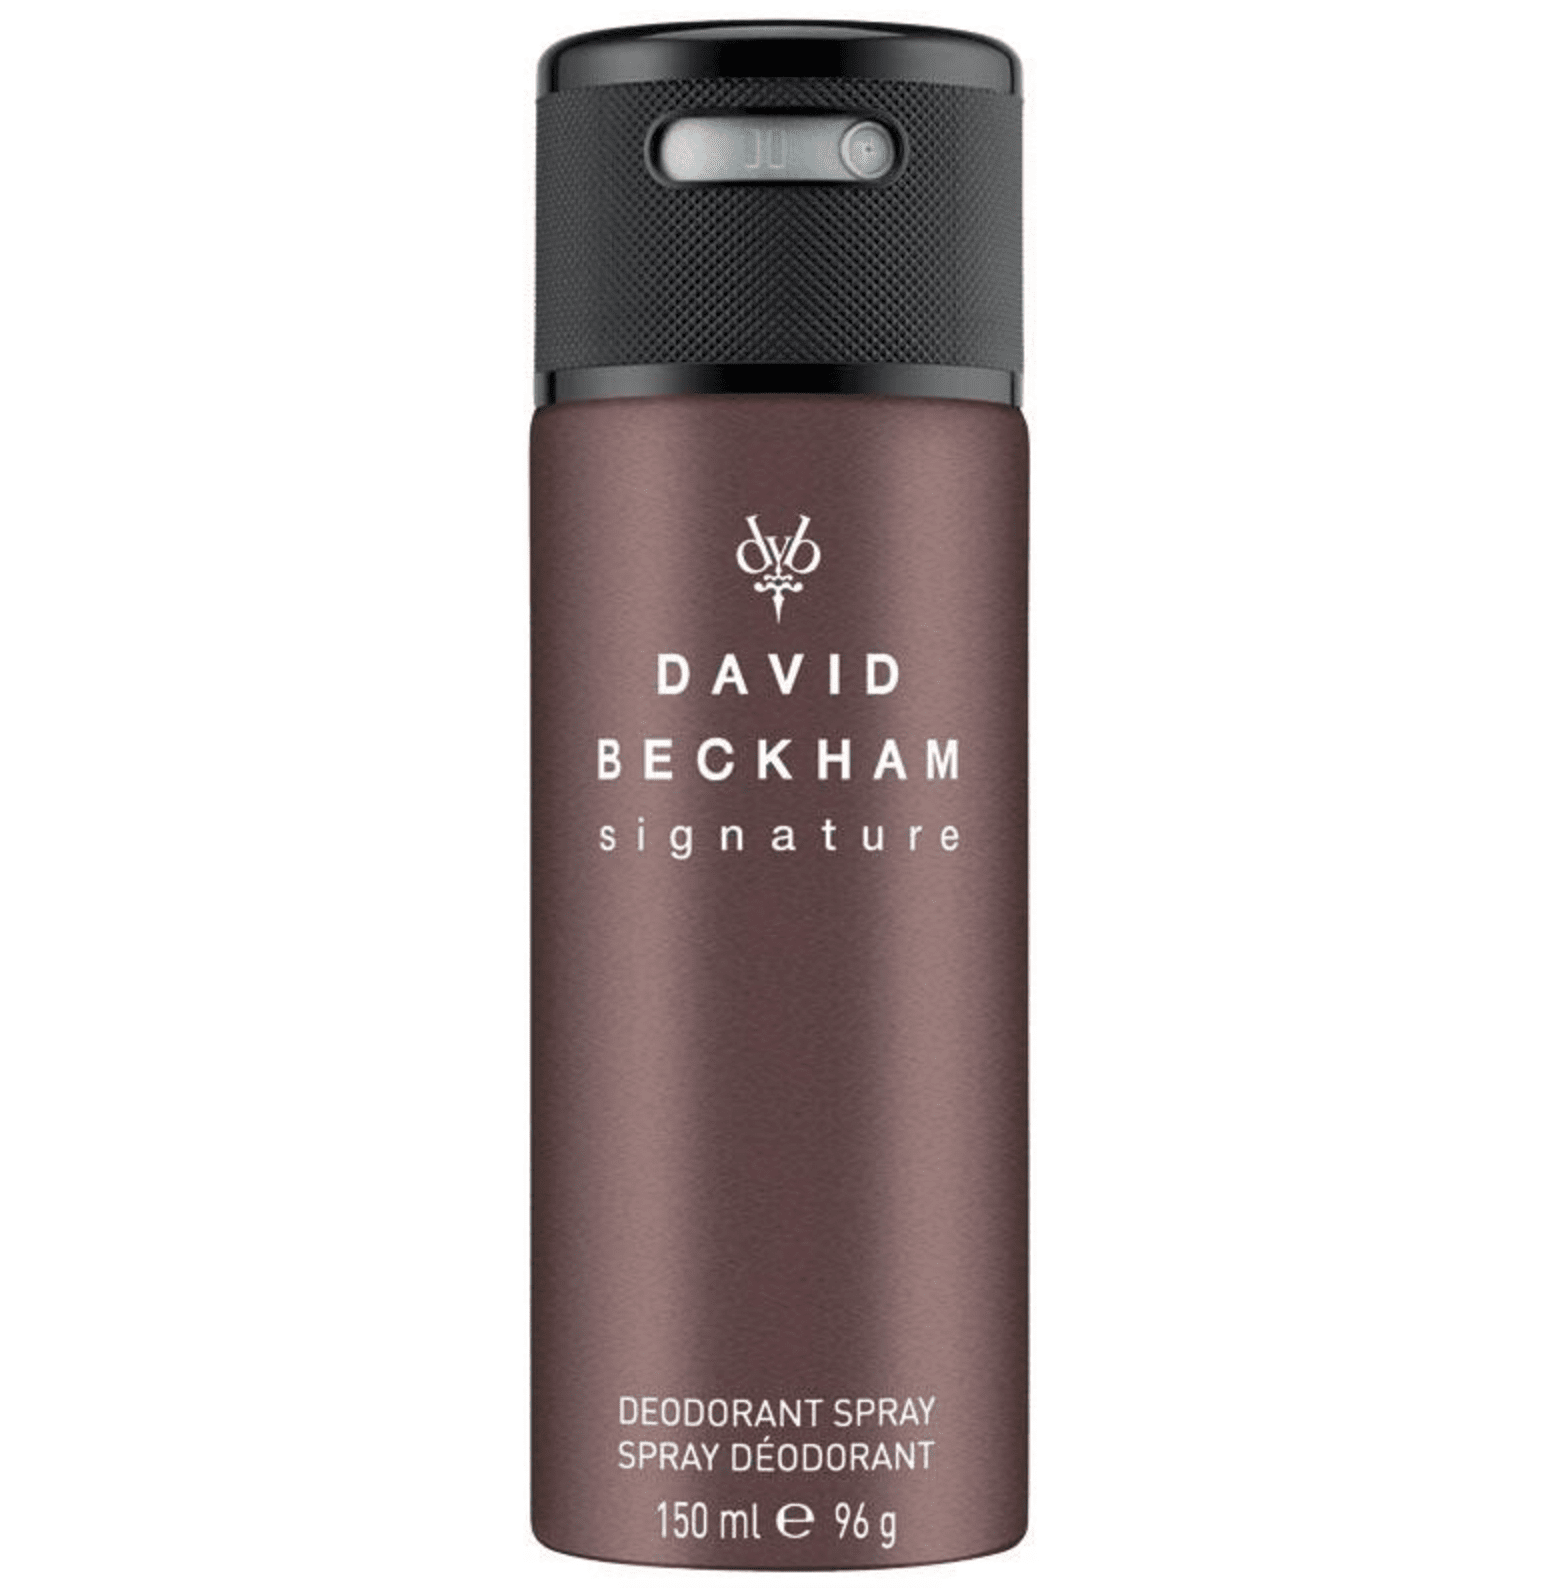 David Beckham Signature Deodorant Spray 150ml